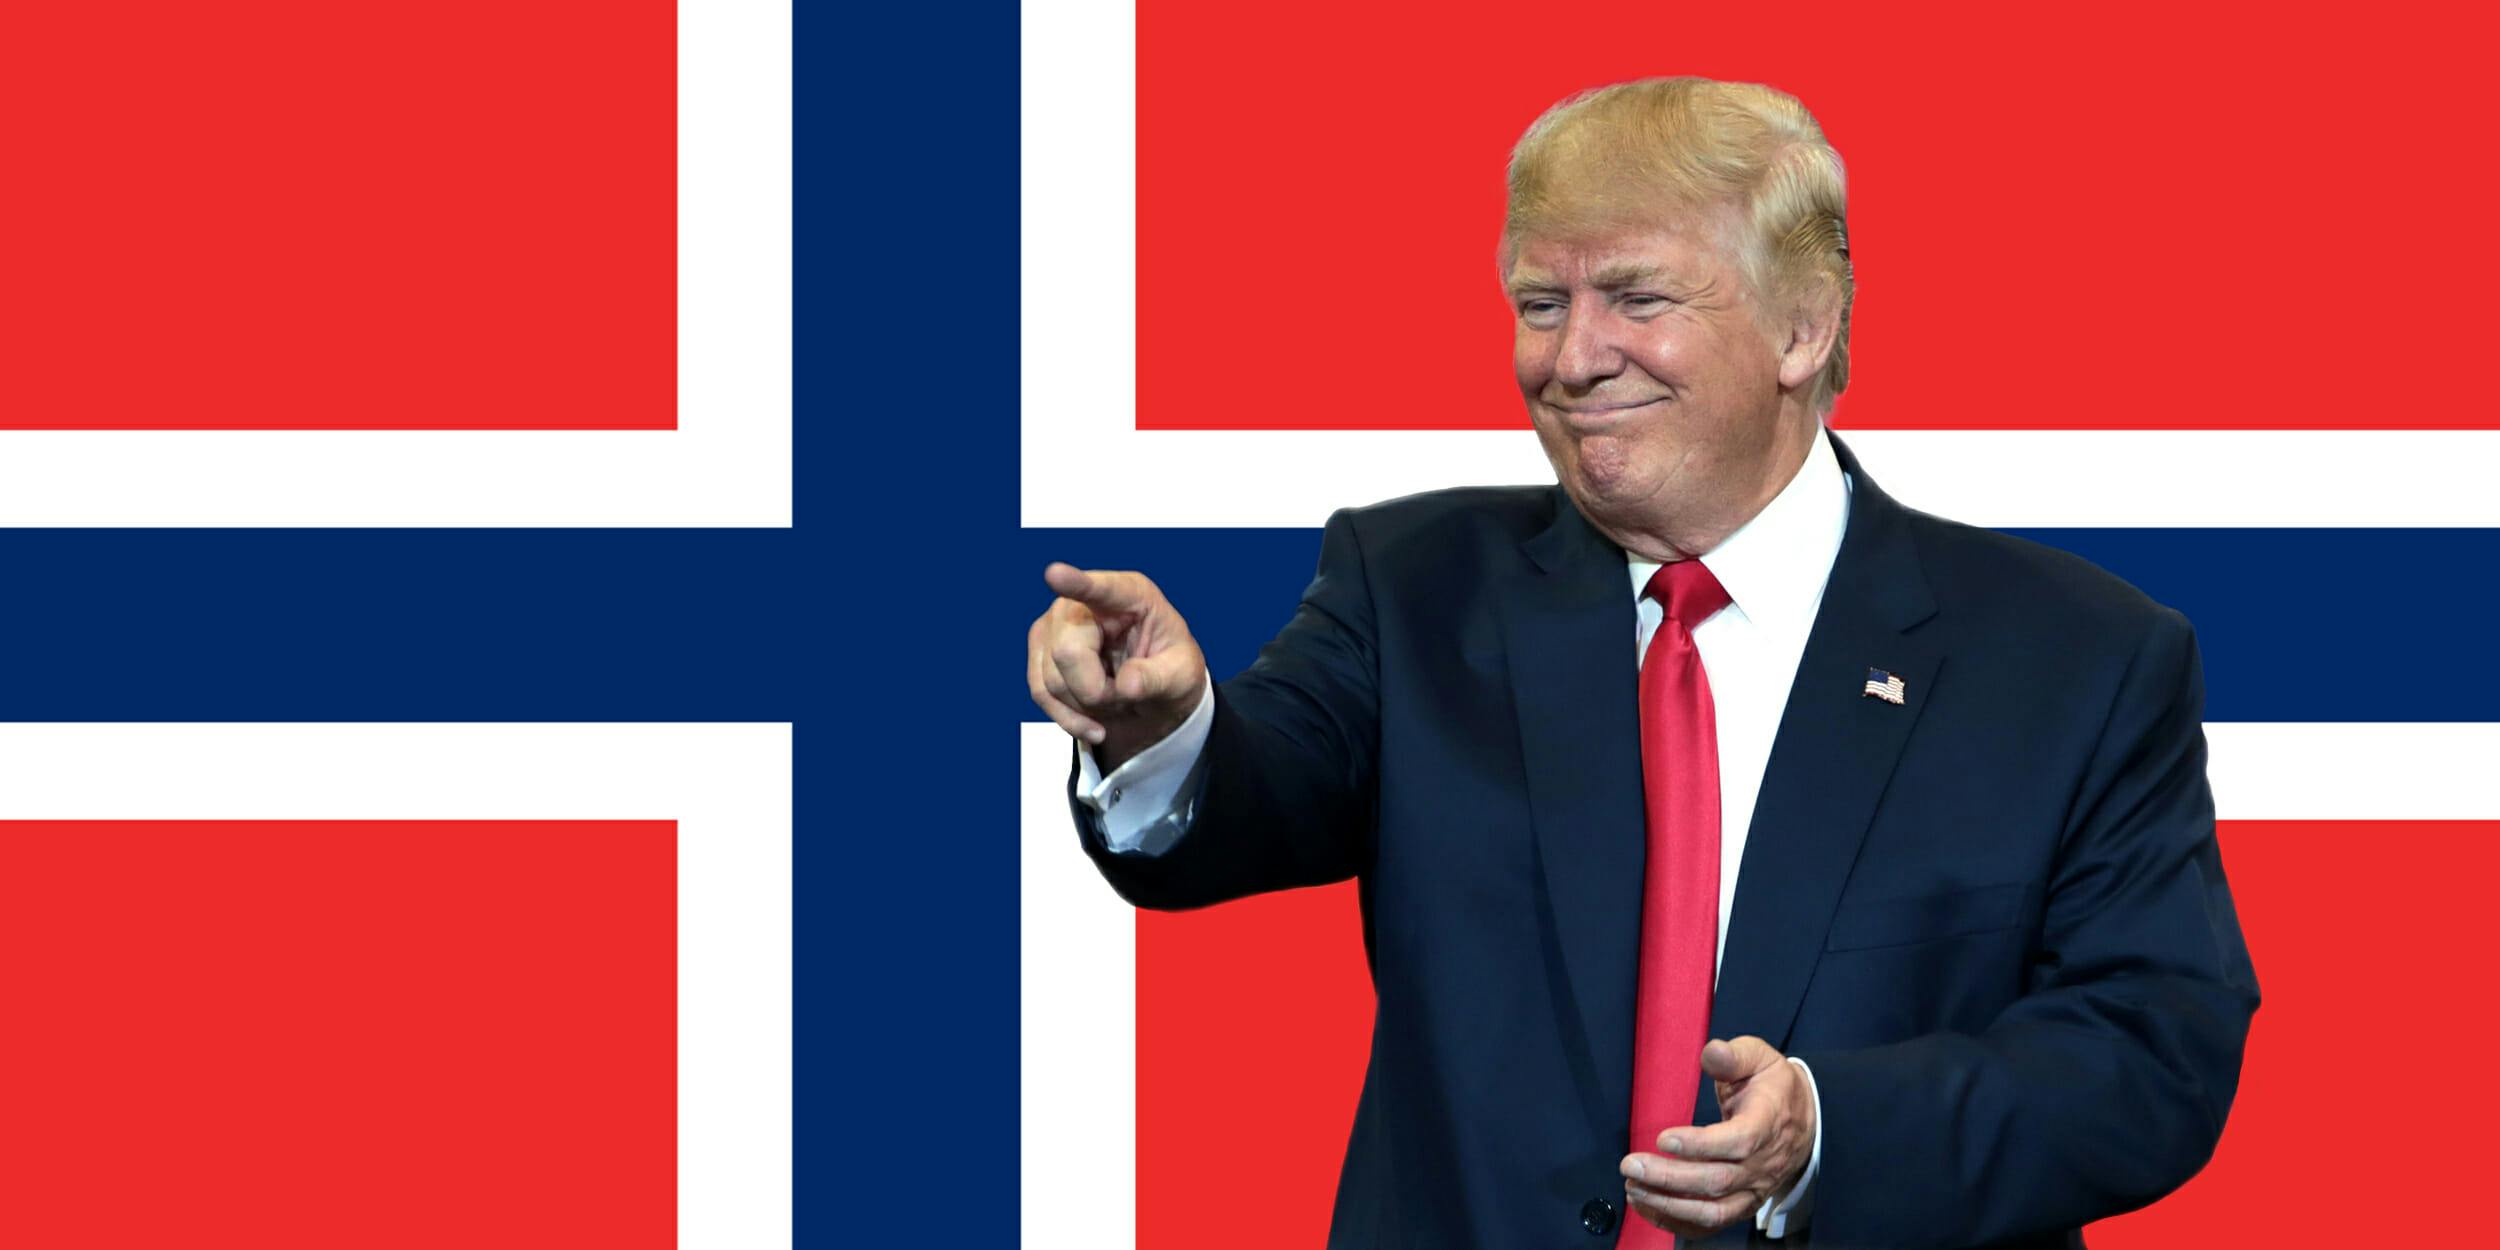 Donald "shithole" Trump over a Norwegian flag